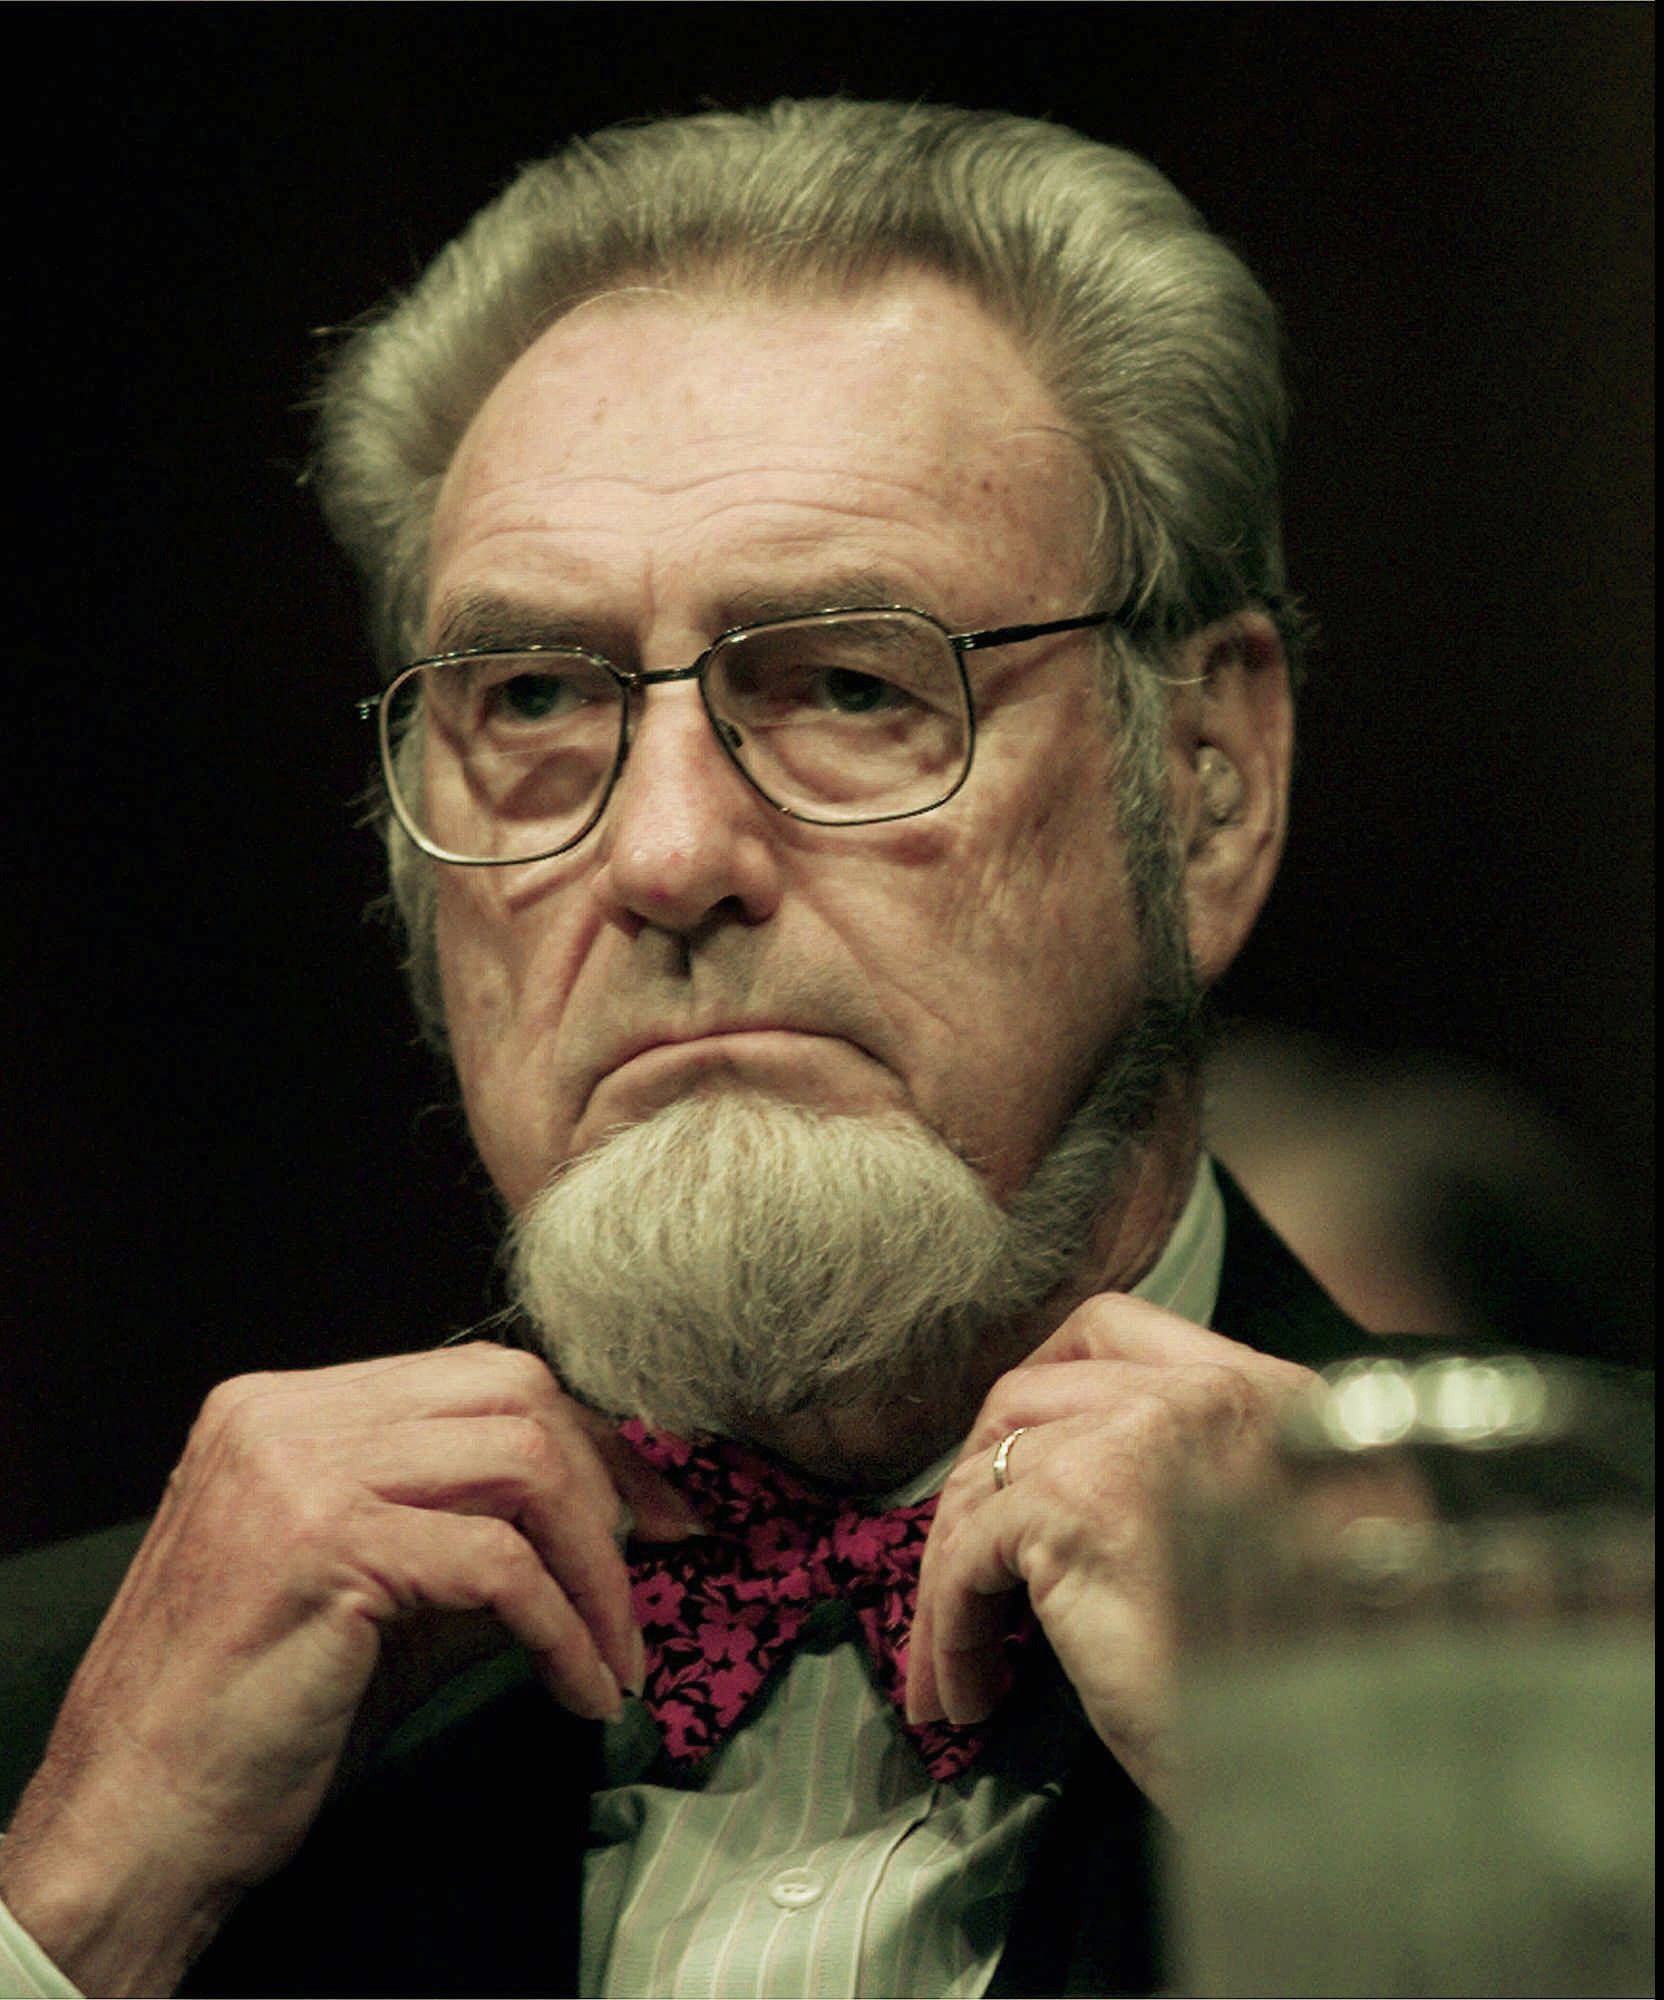 File:C. Everett Koop, 1980s (cropped).jpg - Wikimedia Commons